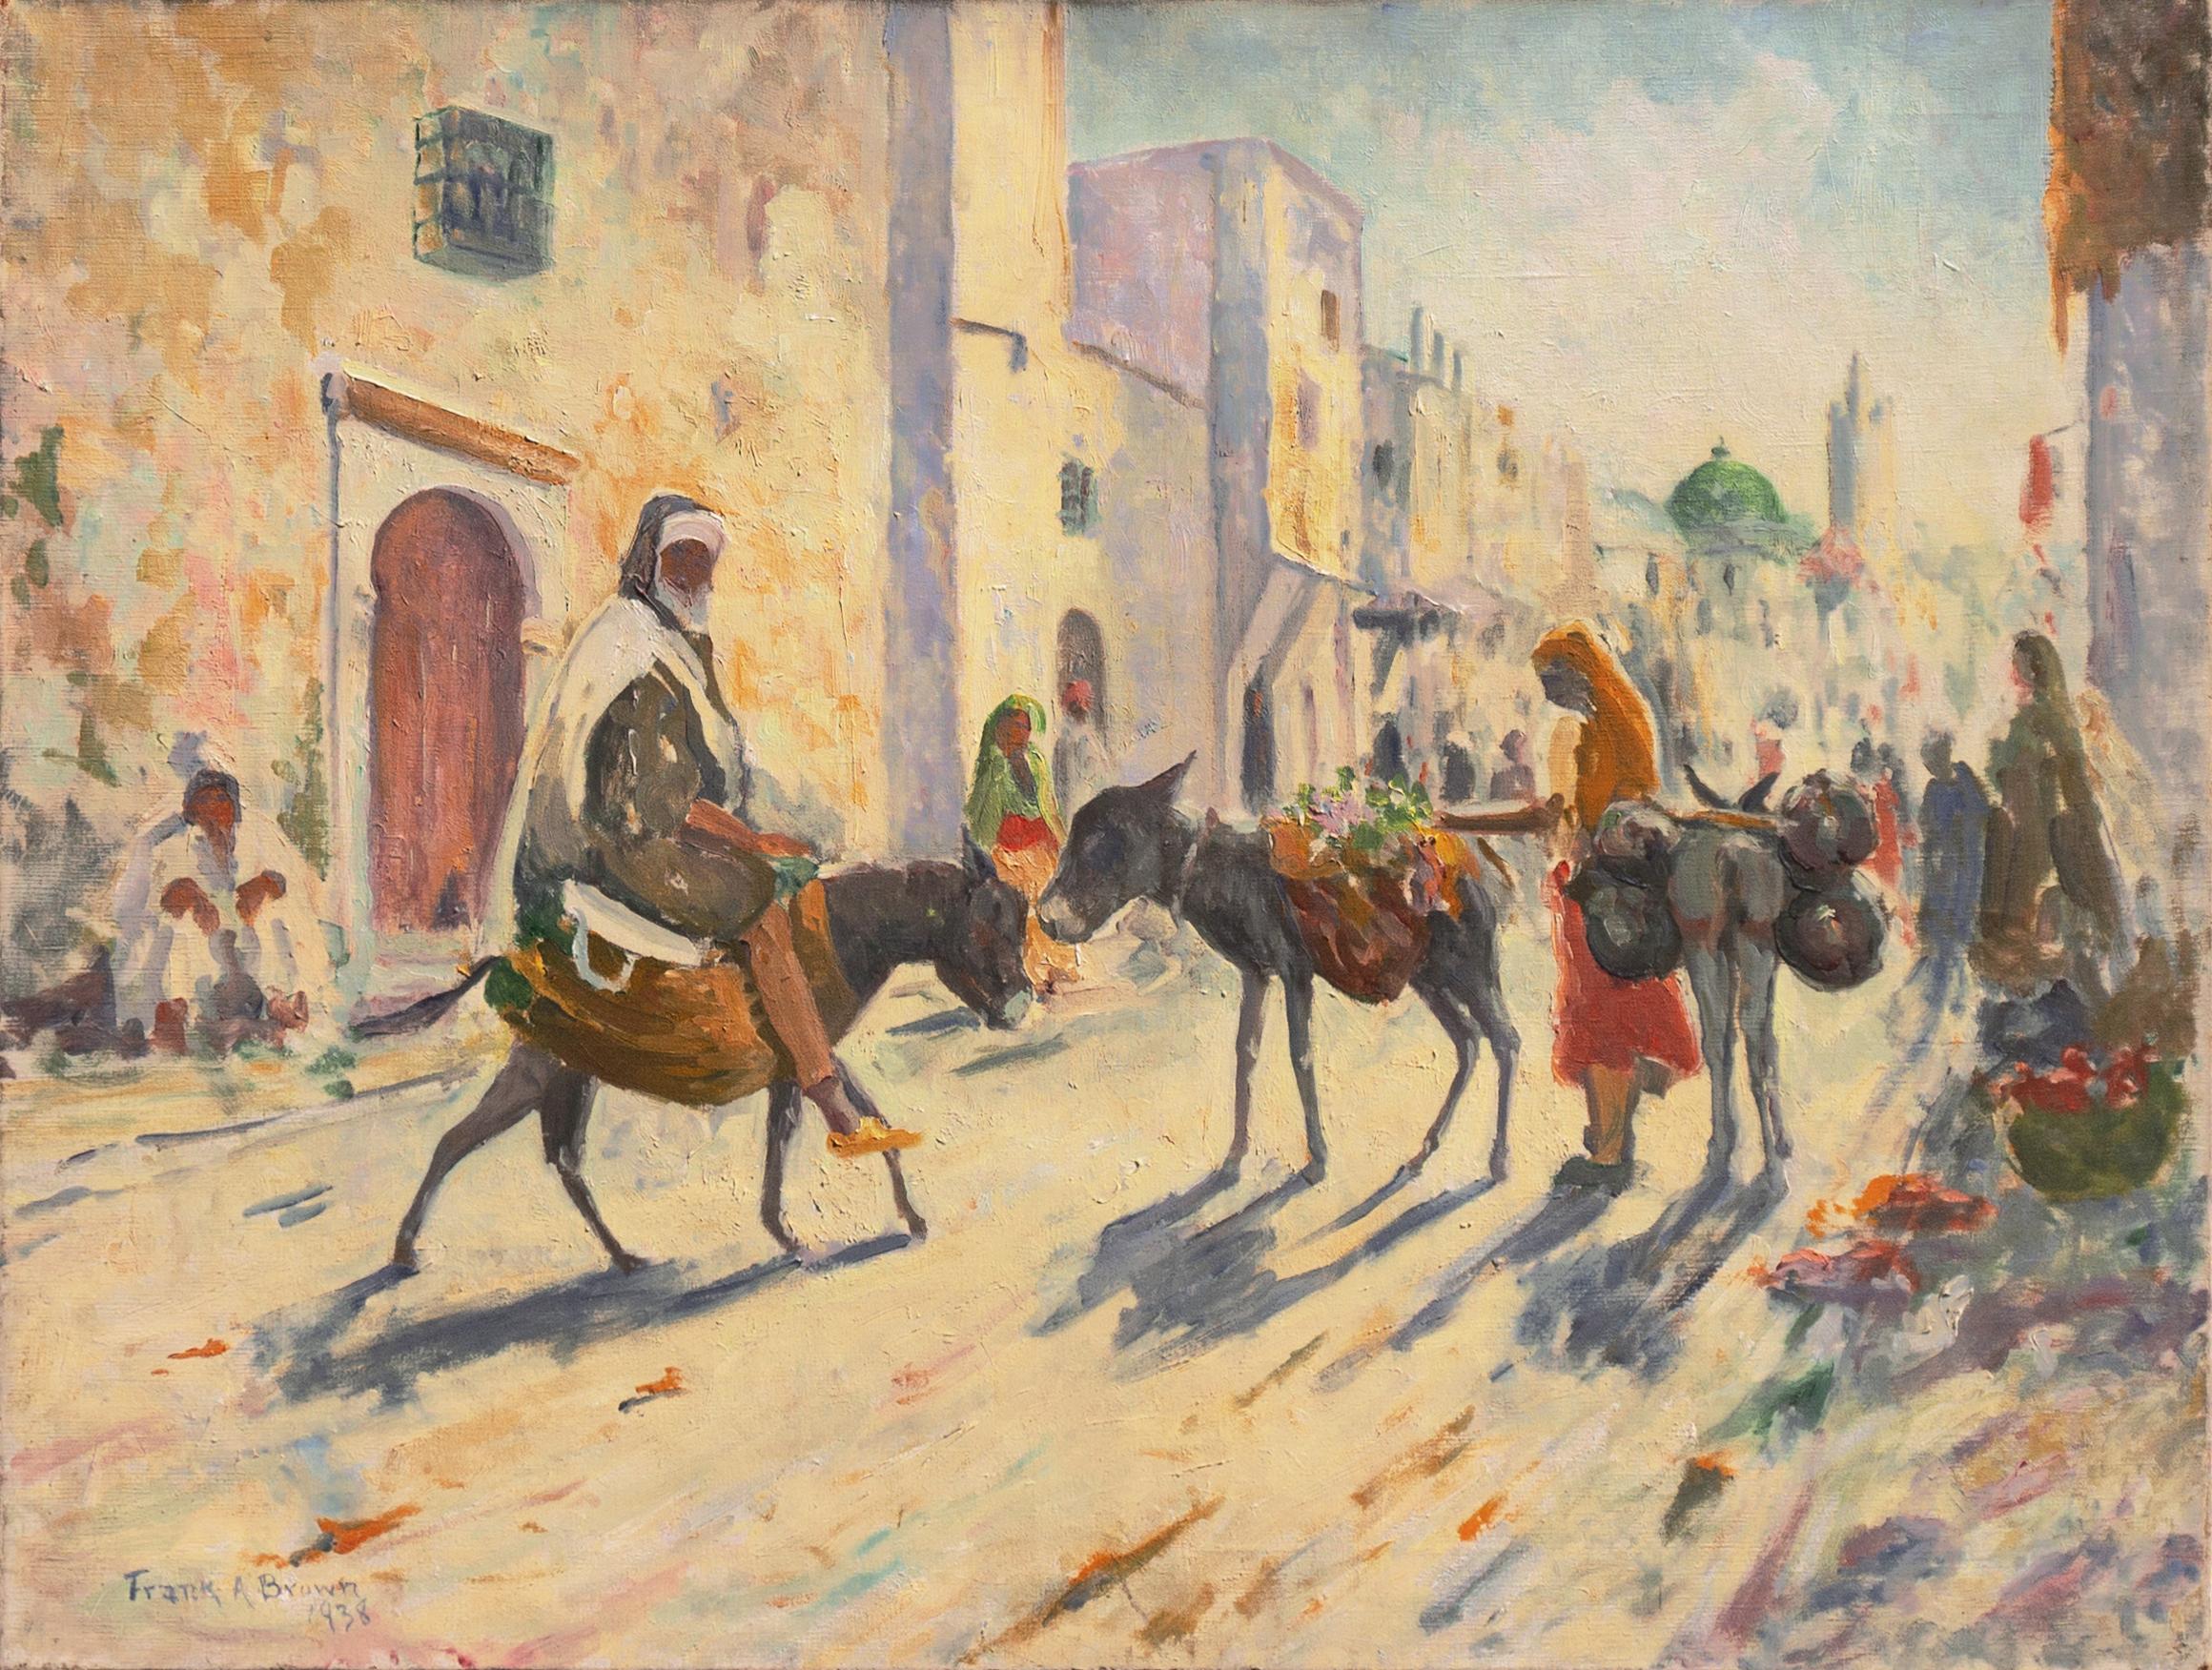 Frank A Brown Landscape Painting - 'Algerian Street', American Orientalist, Académie Julian, Paris Salon, NAD, PAFA